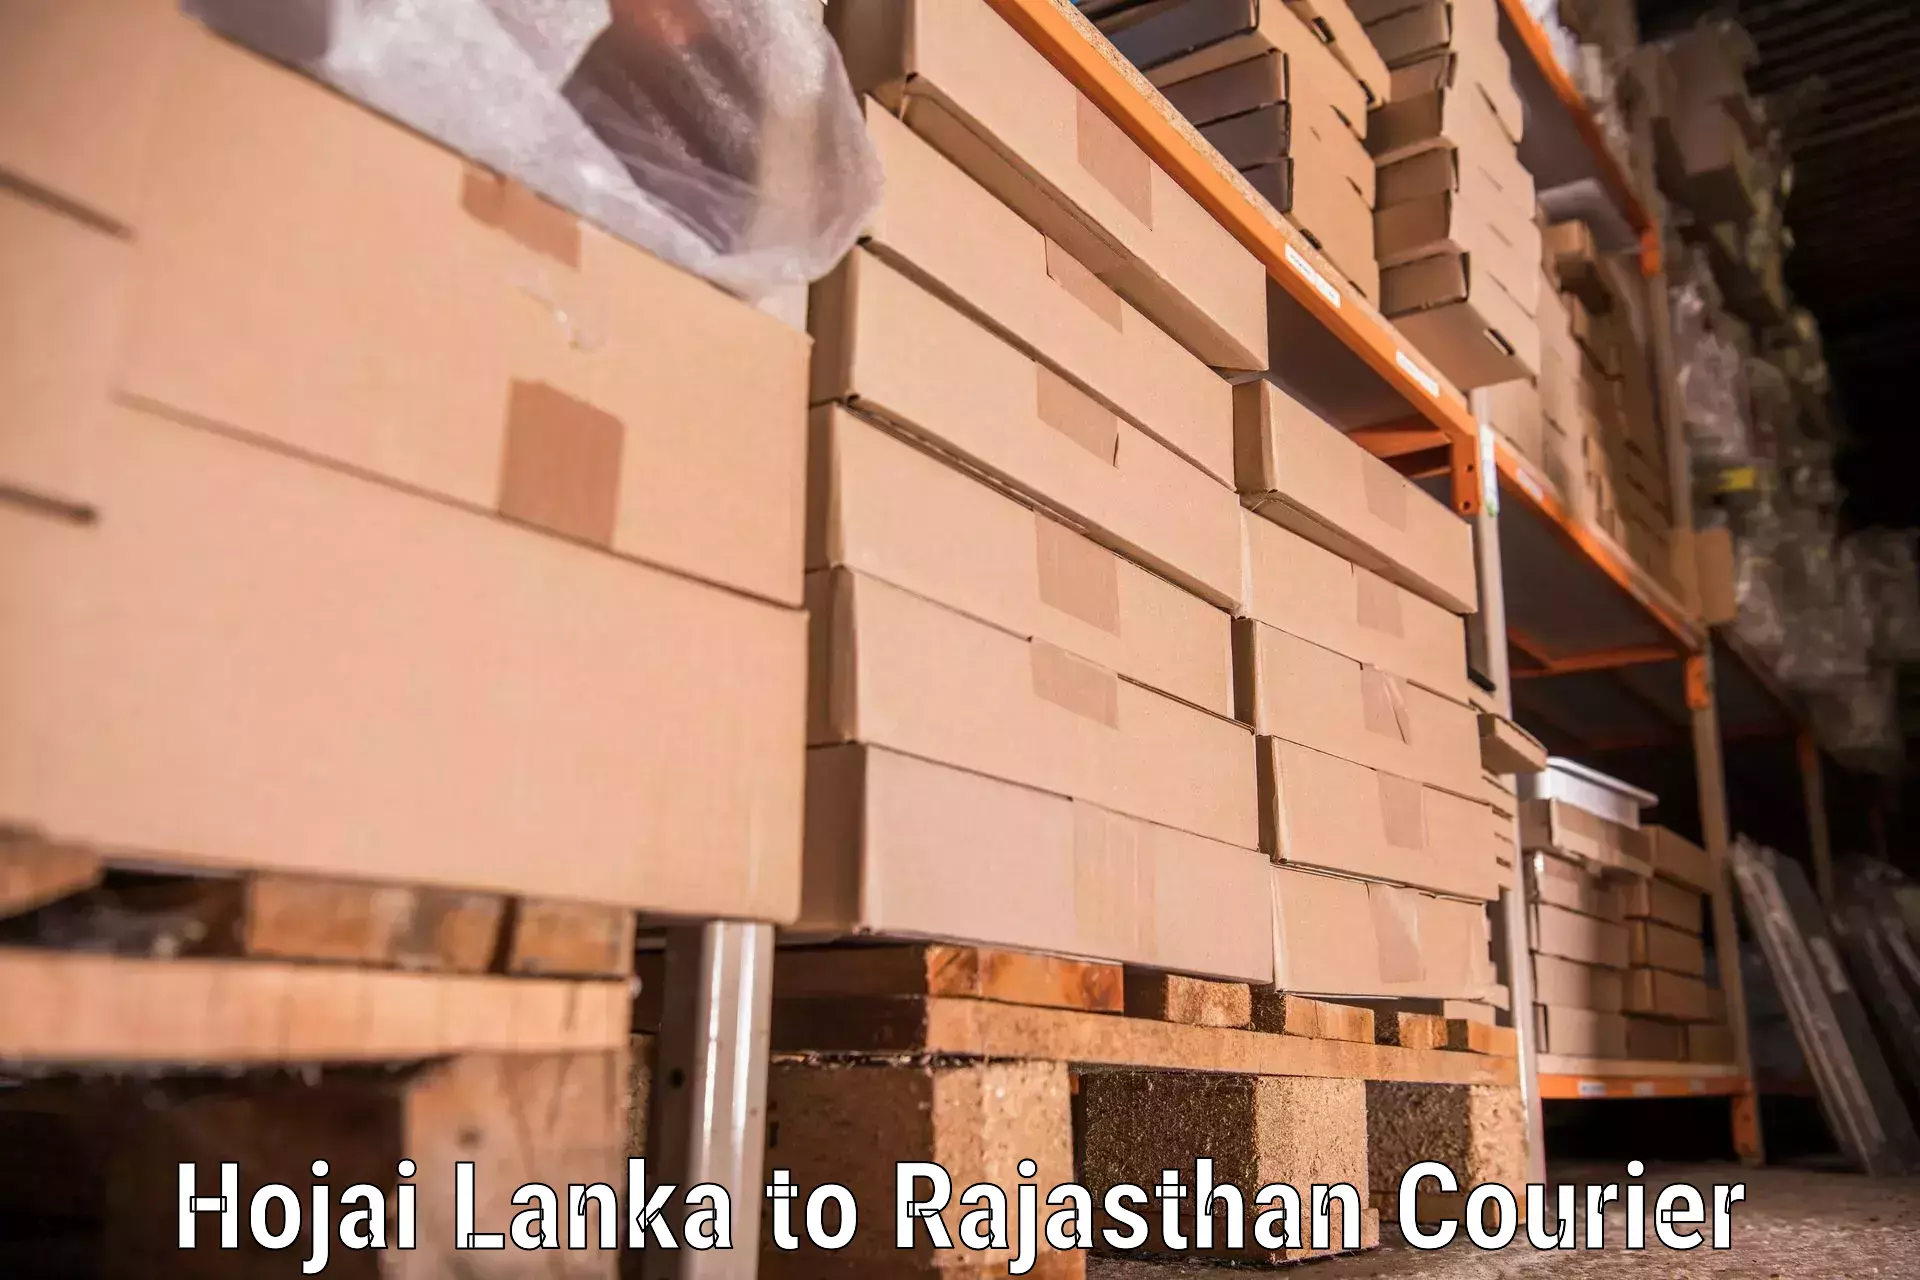 Professional movers Hojai Lanka to Beawar